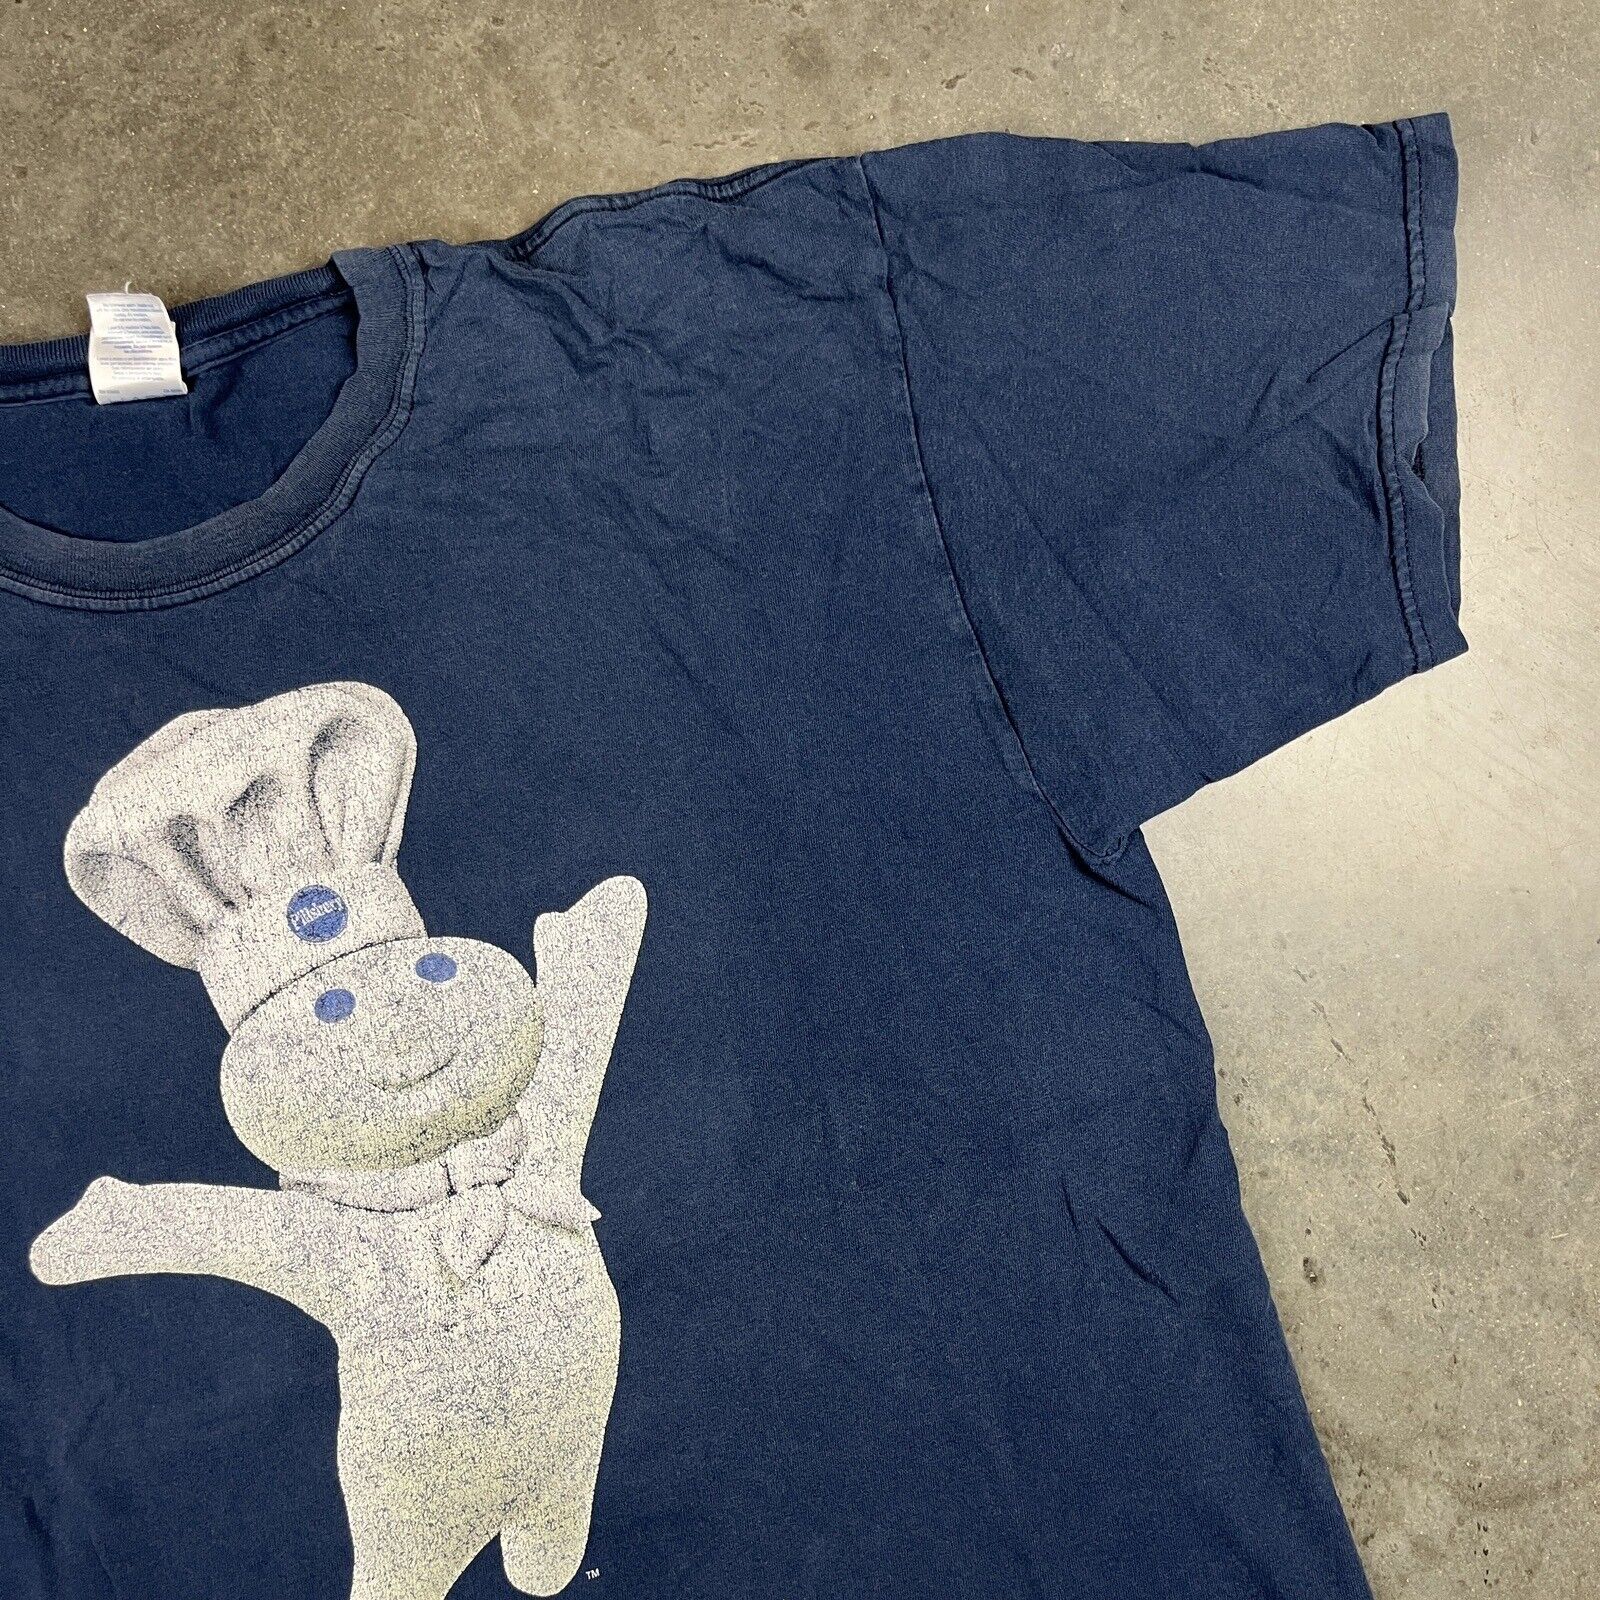 Pillsbury Doughboy T Shirt Mens XL Blue Short Sleeve Crewneck Vintage Preowned